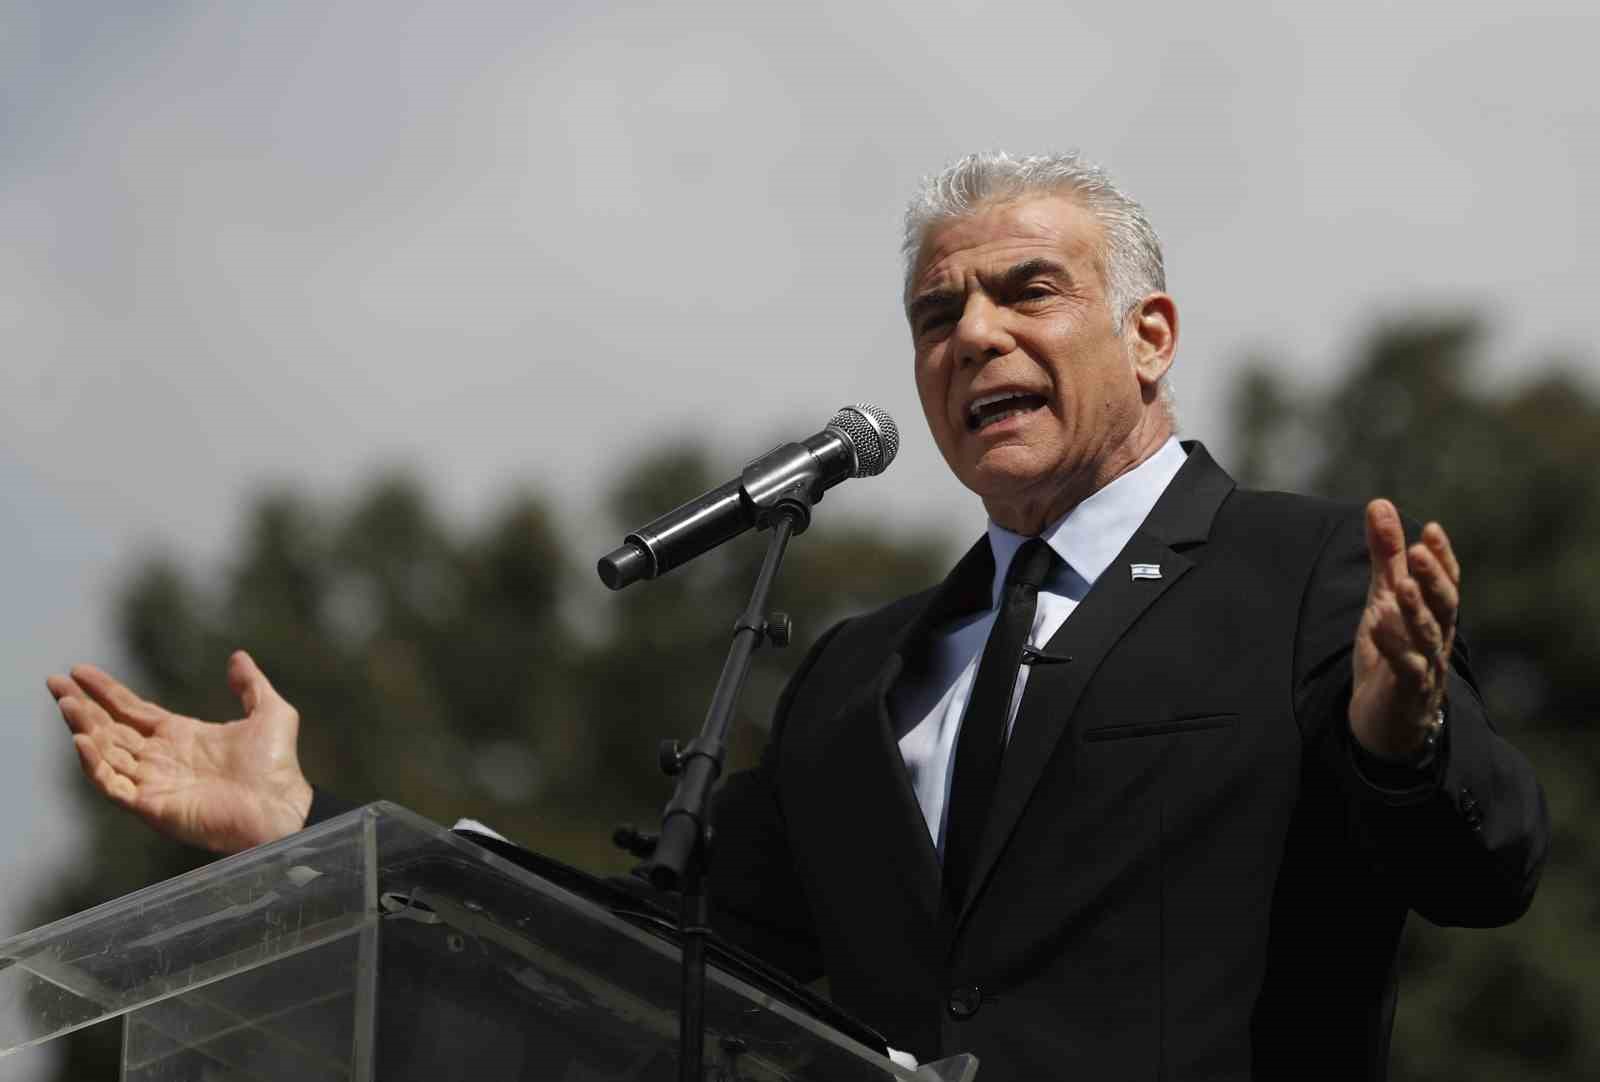 İsrail muhalefet lideri Lapid: “İsrail devleti sorumsuz delilerin rehinesi haline geldi”